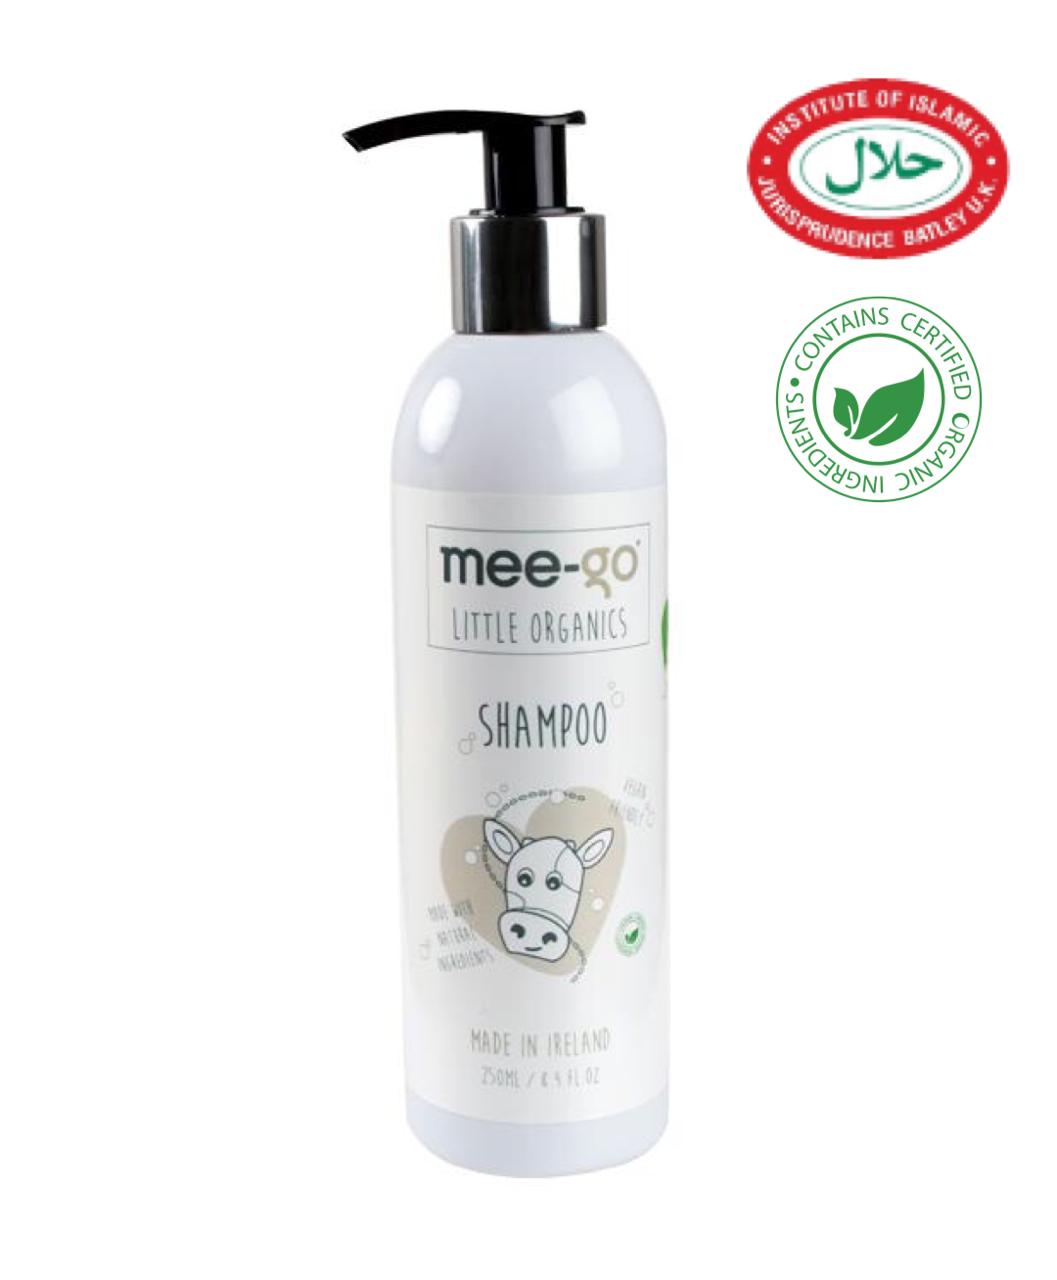 Mee-go Little Organics Halal Shampoo